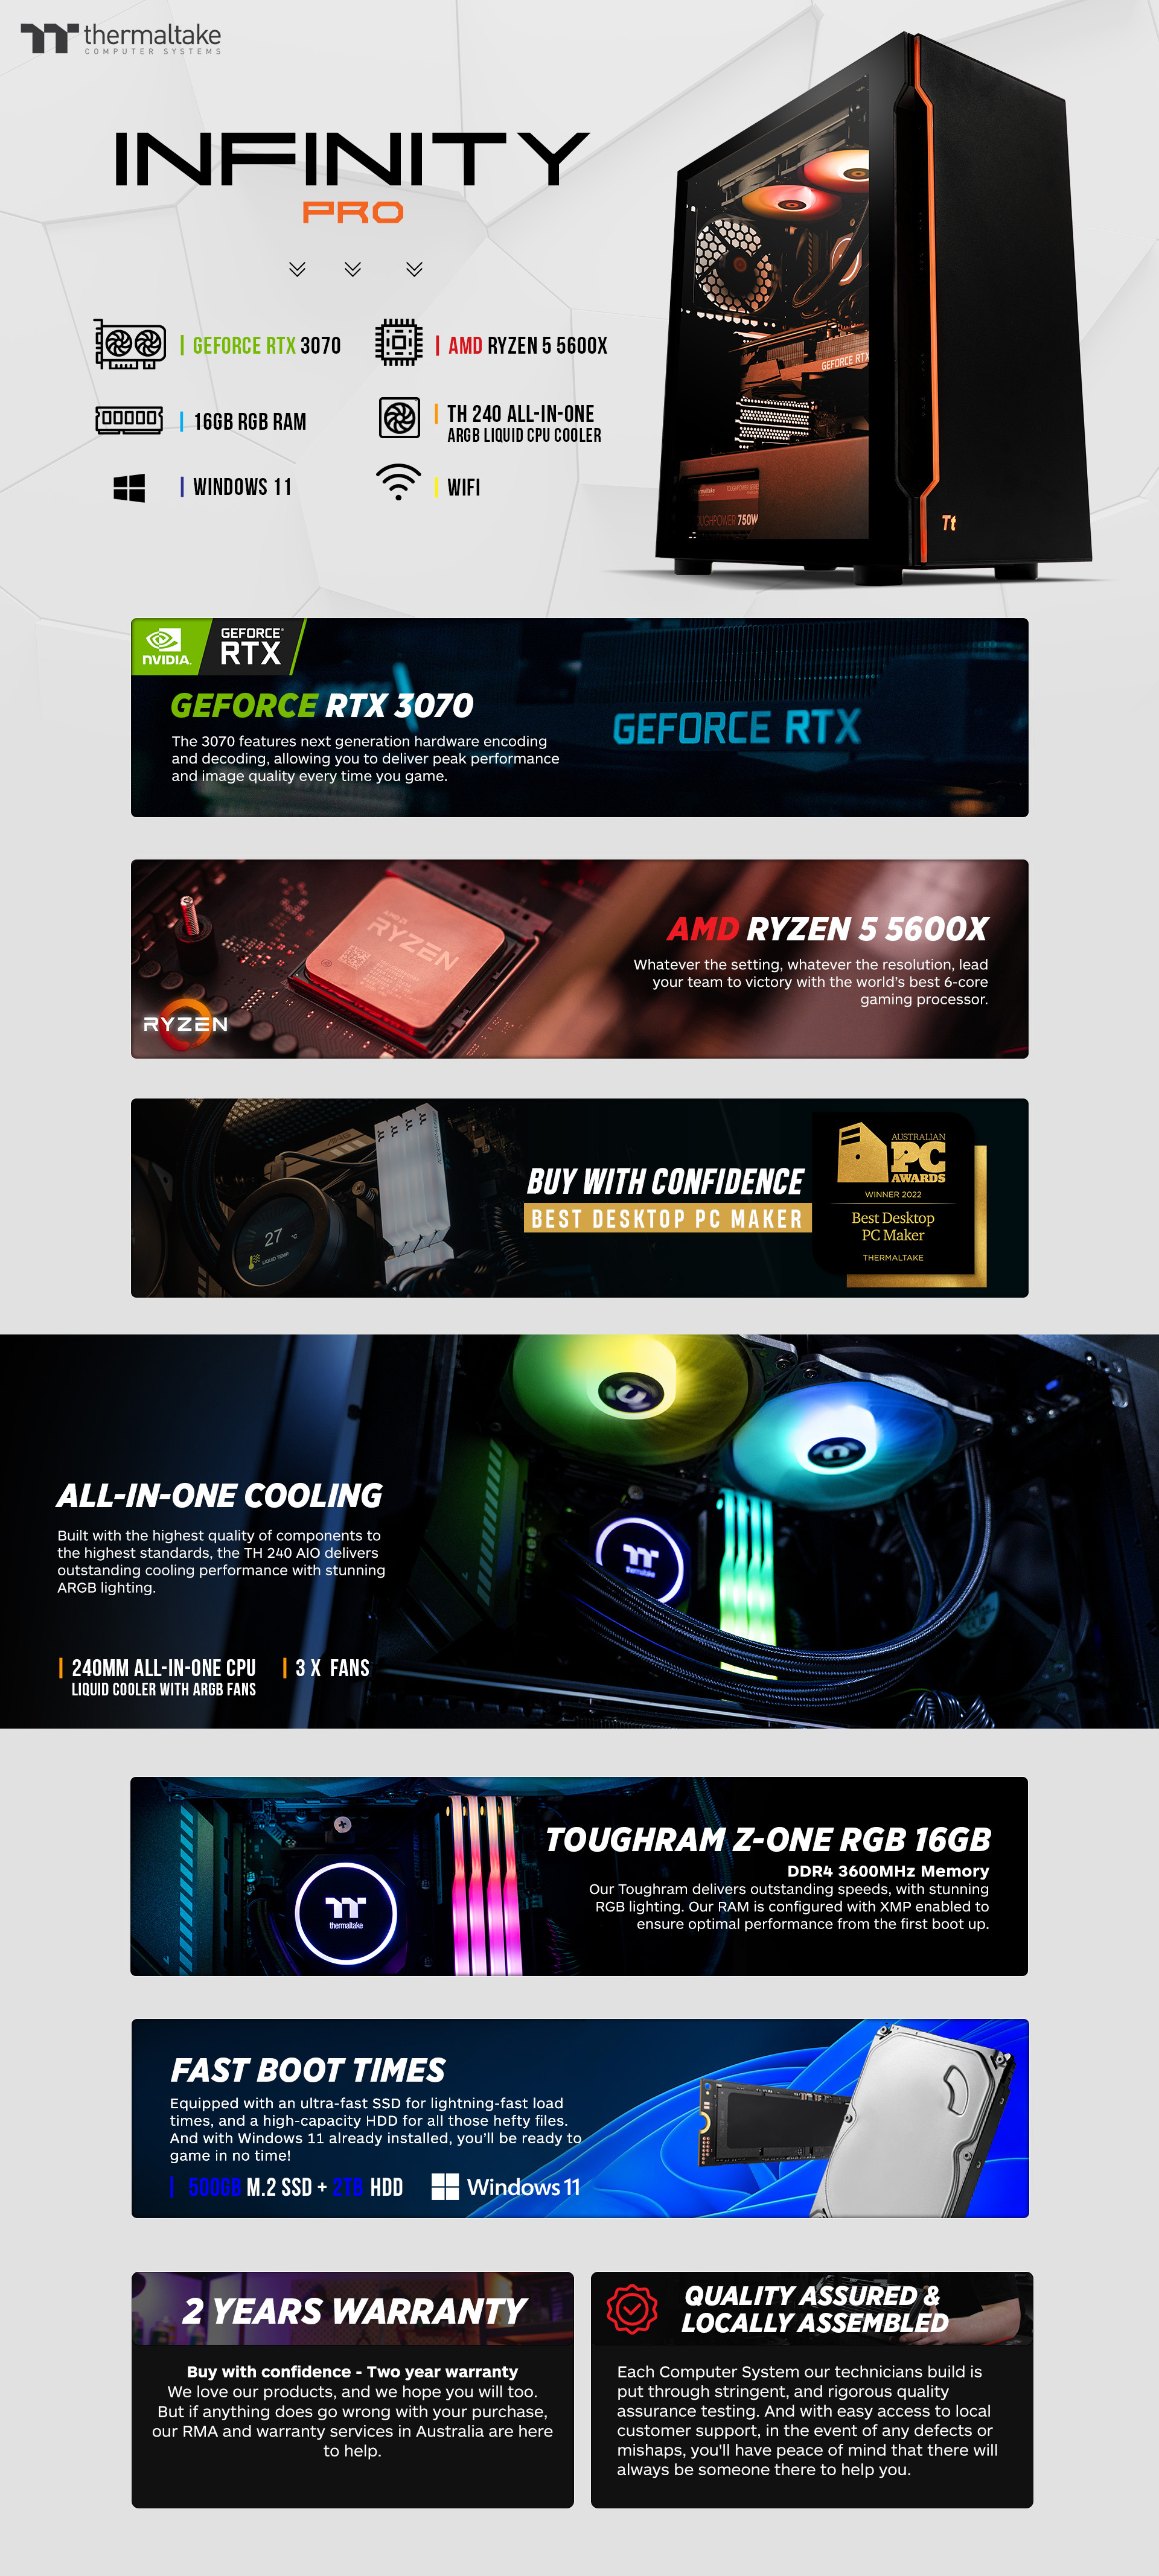 Branded-Gaming-PCs-Thermaltake-Infinity-Pro-Ryzen-5-5600X-RTX-3070-500GB-16GB-RAM-W11H-Gaming-PC-CA-4J2-00D1WA-01-2